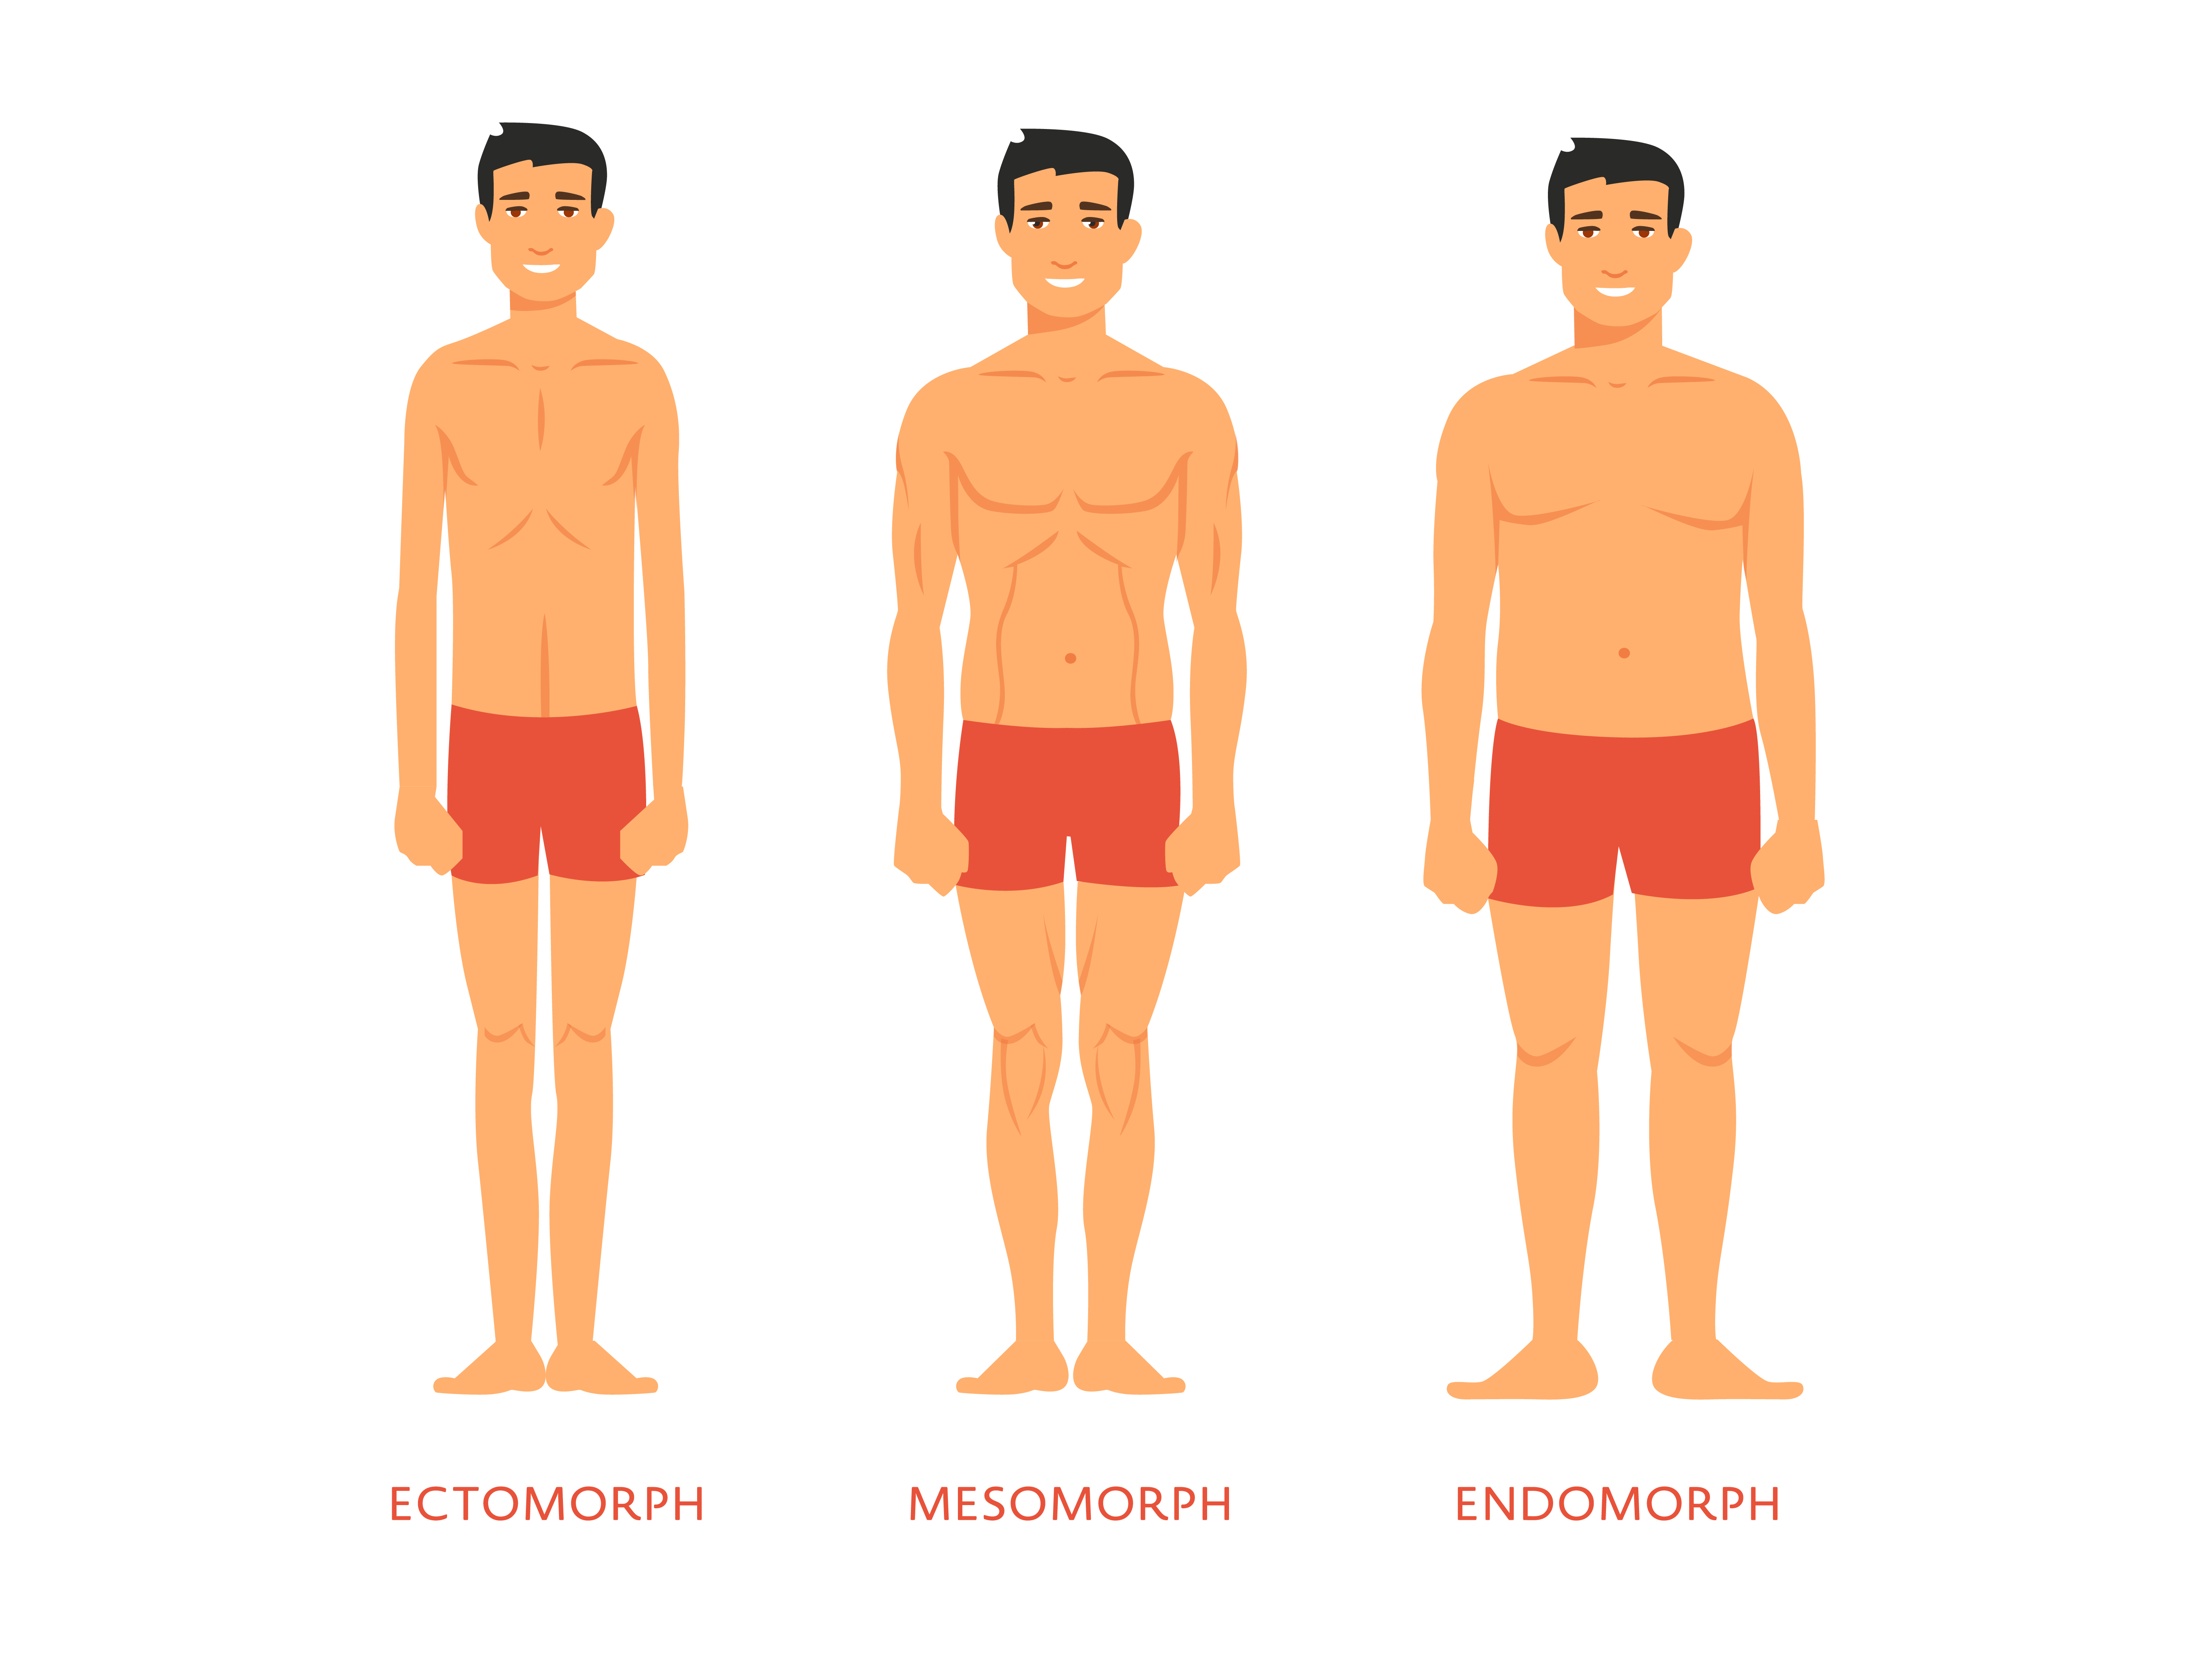 https://drberg-dam.imgix.net/others/human-body-types-men-endomorph-ectomorph.jpg